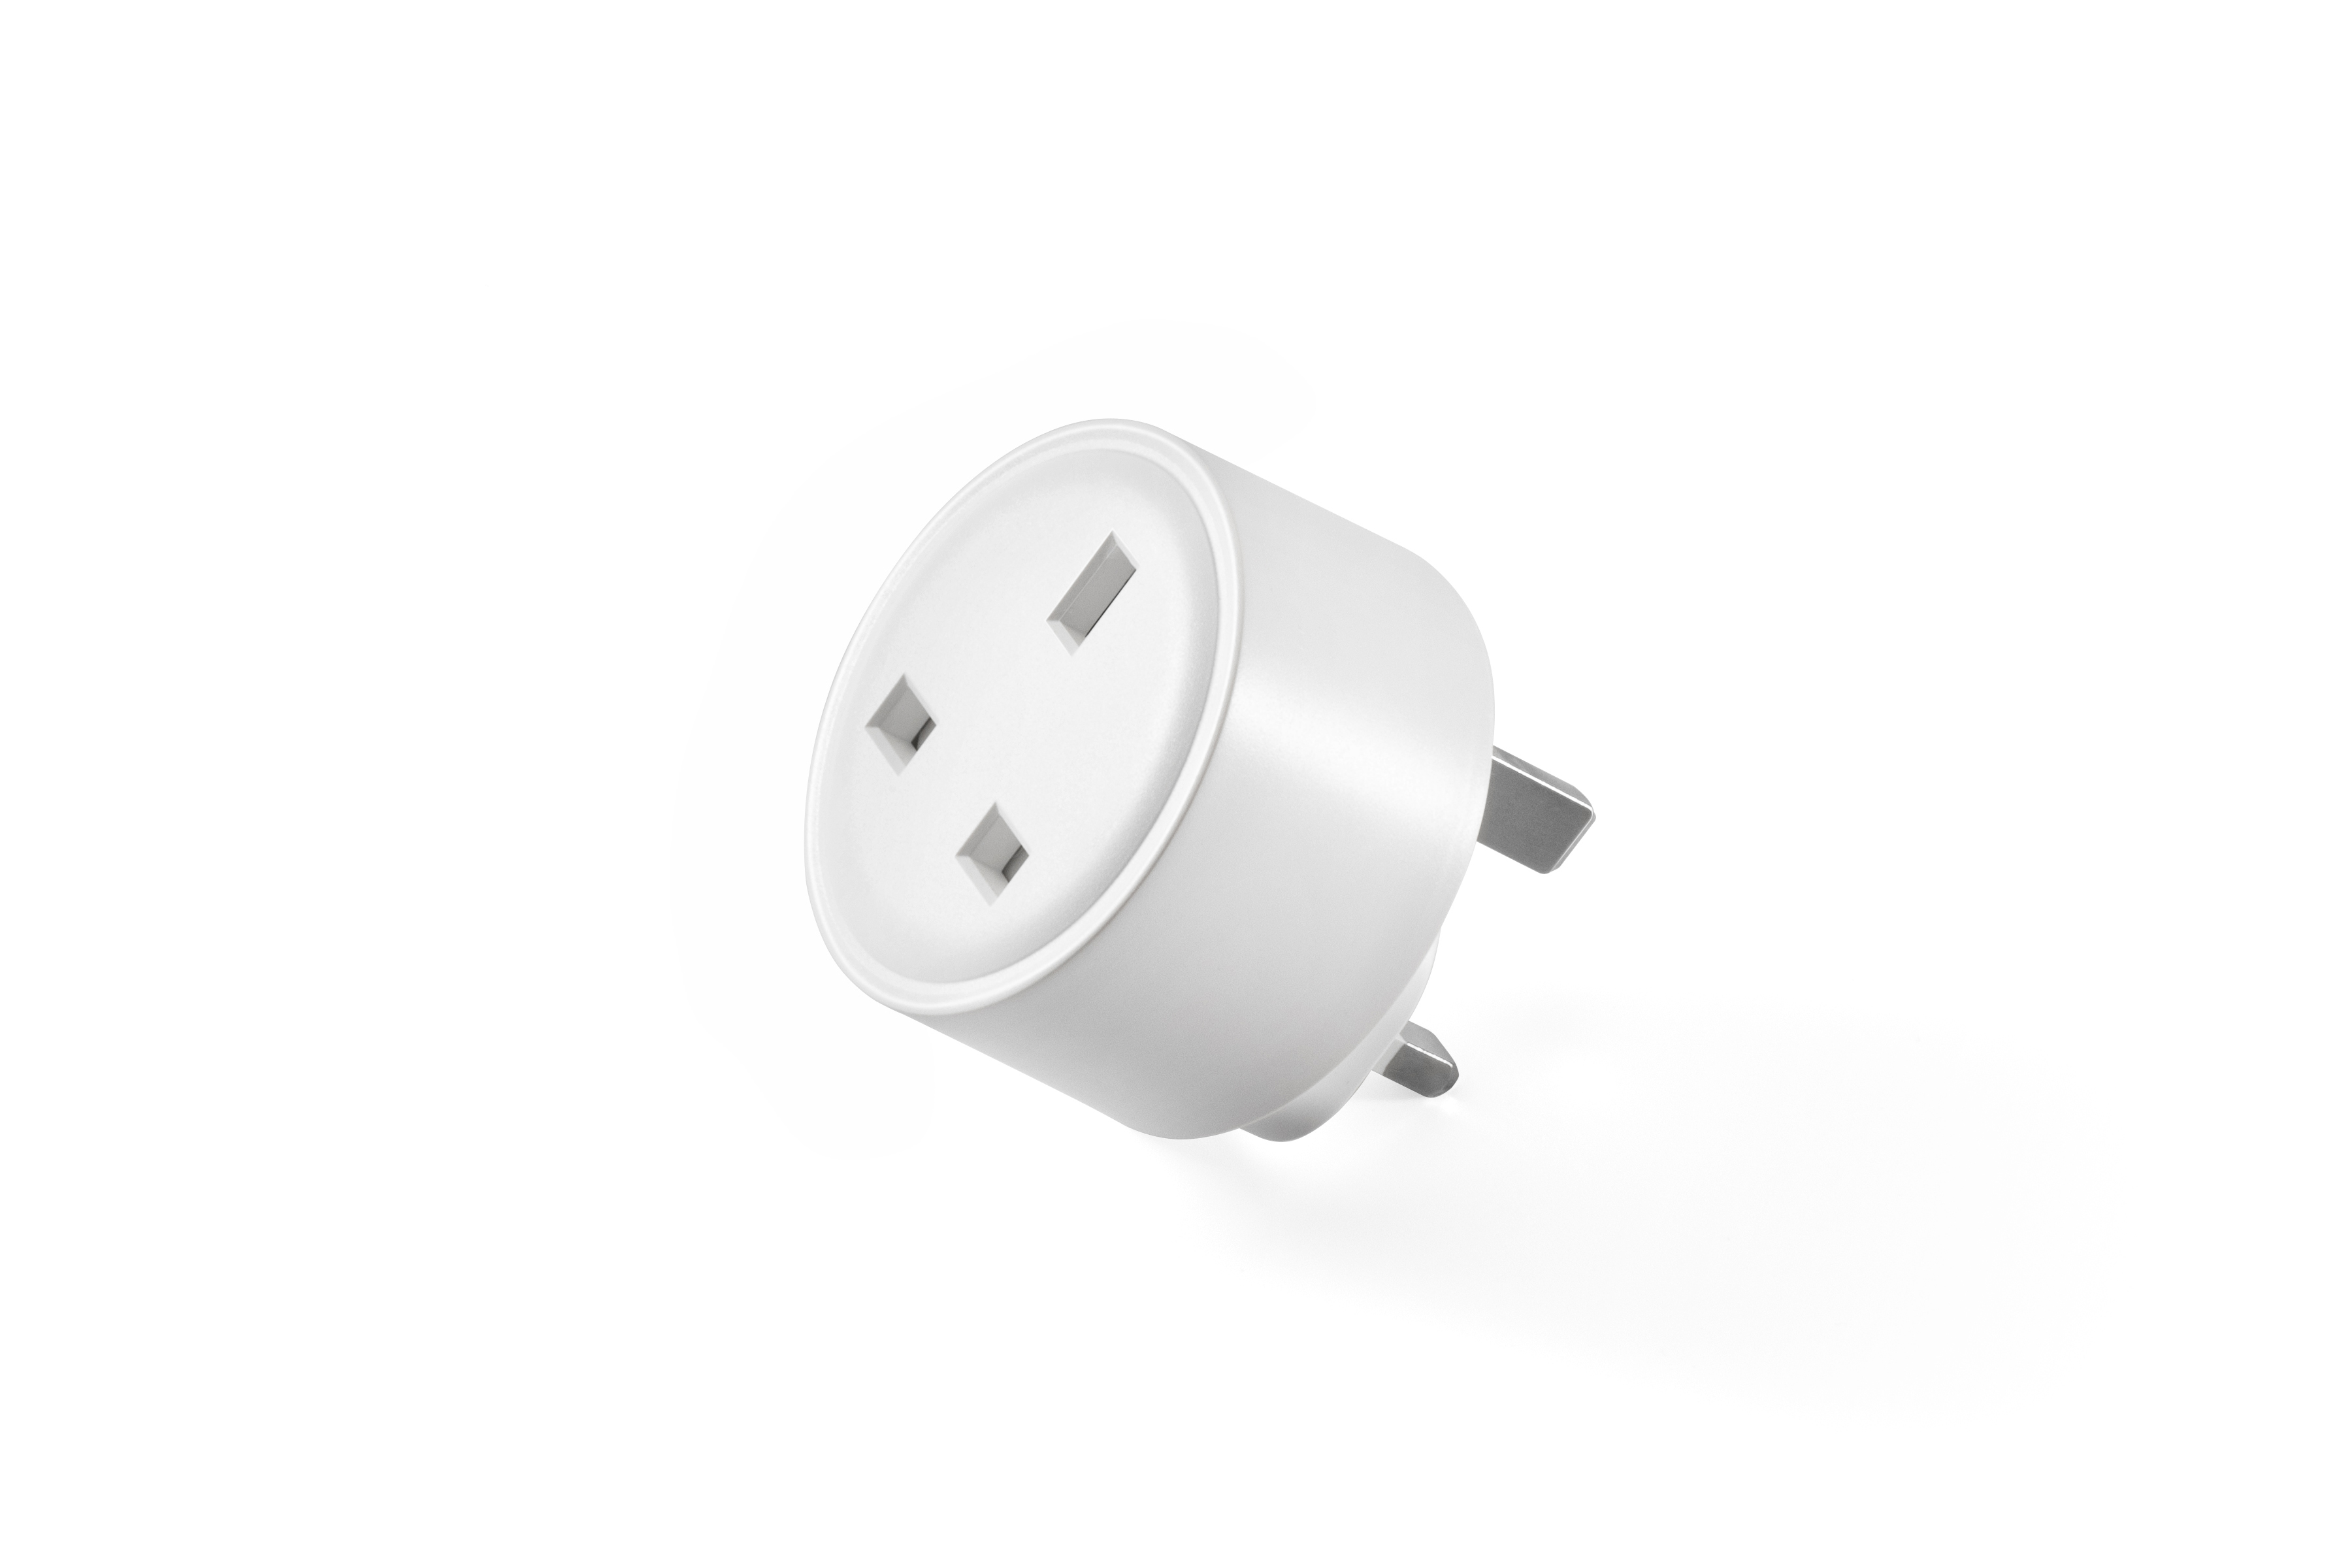 108x Set of UK Smart Plug to use with Amazon Alexa Echo, Dot Google Nest Home